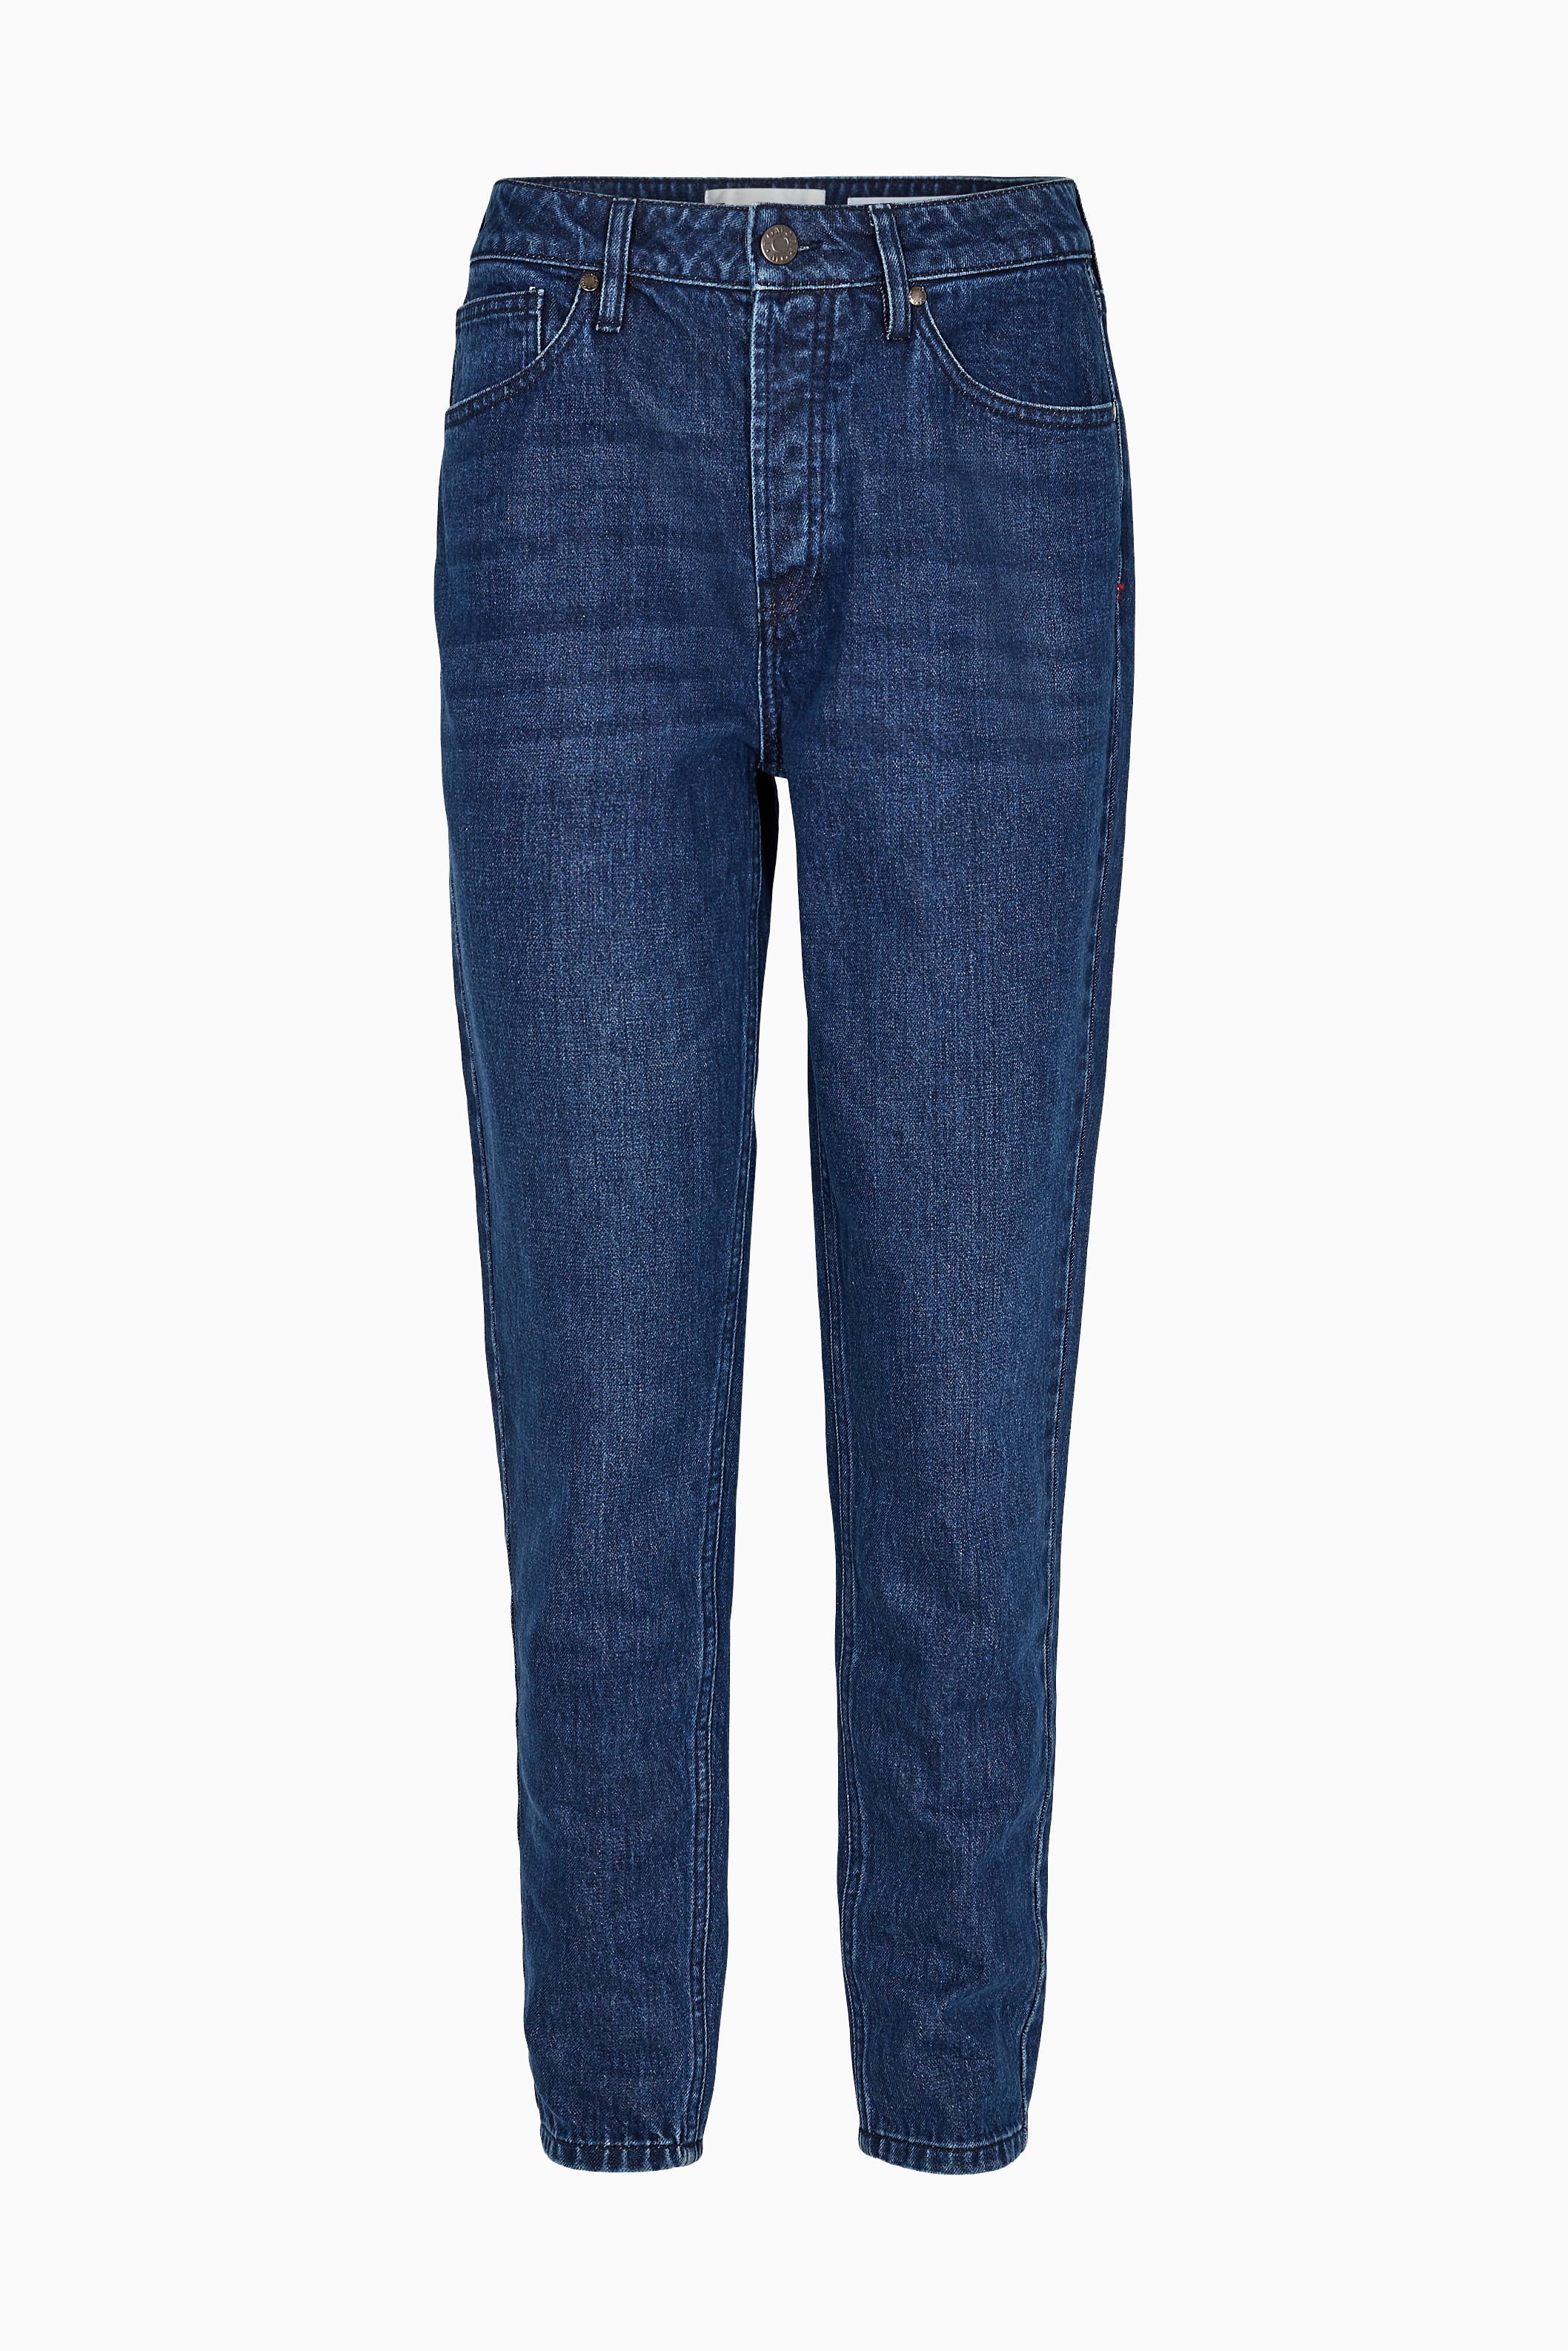 Tomorrow TMRW Hepburn Jeans - Perugia Original Jeans & Pants 51 Denim Blue